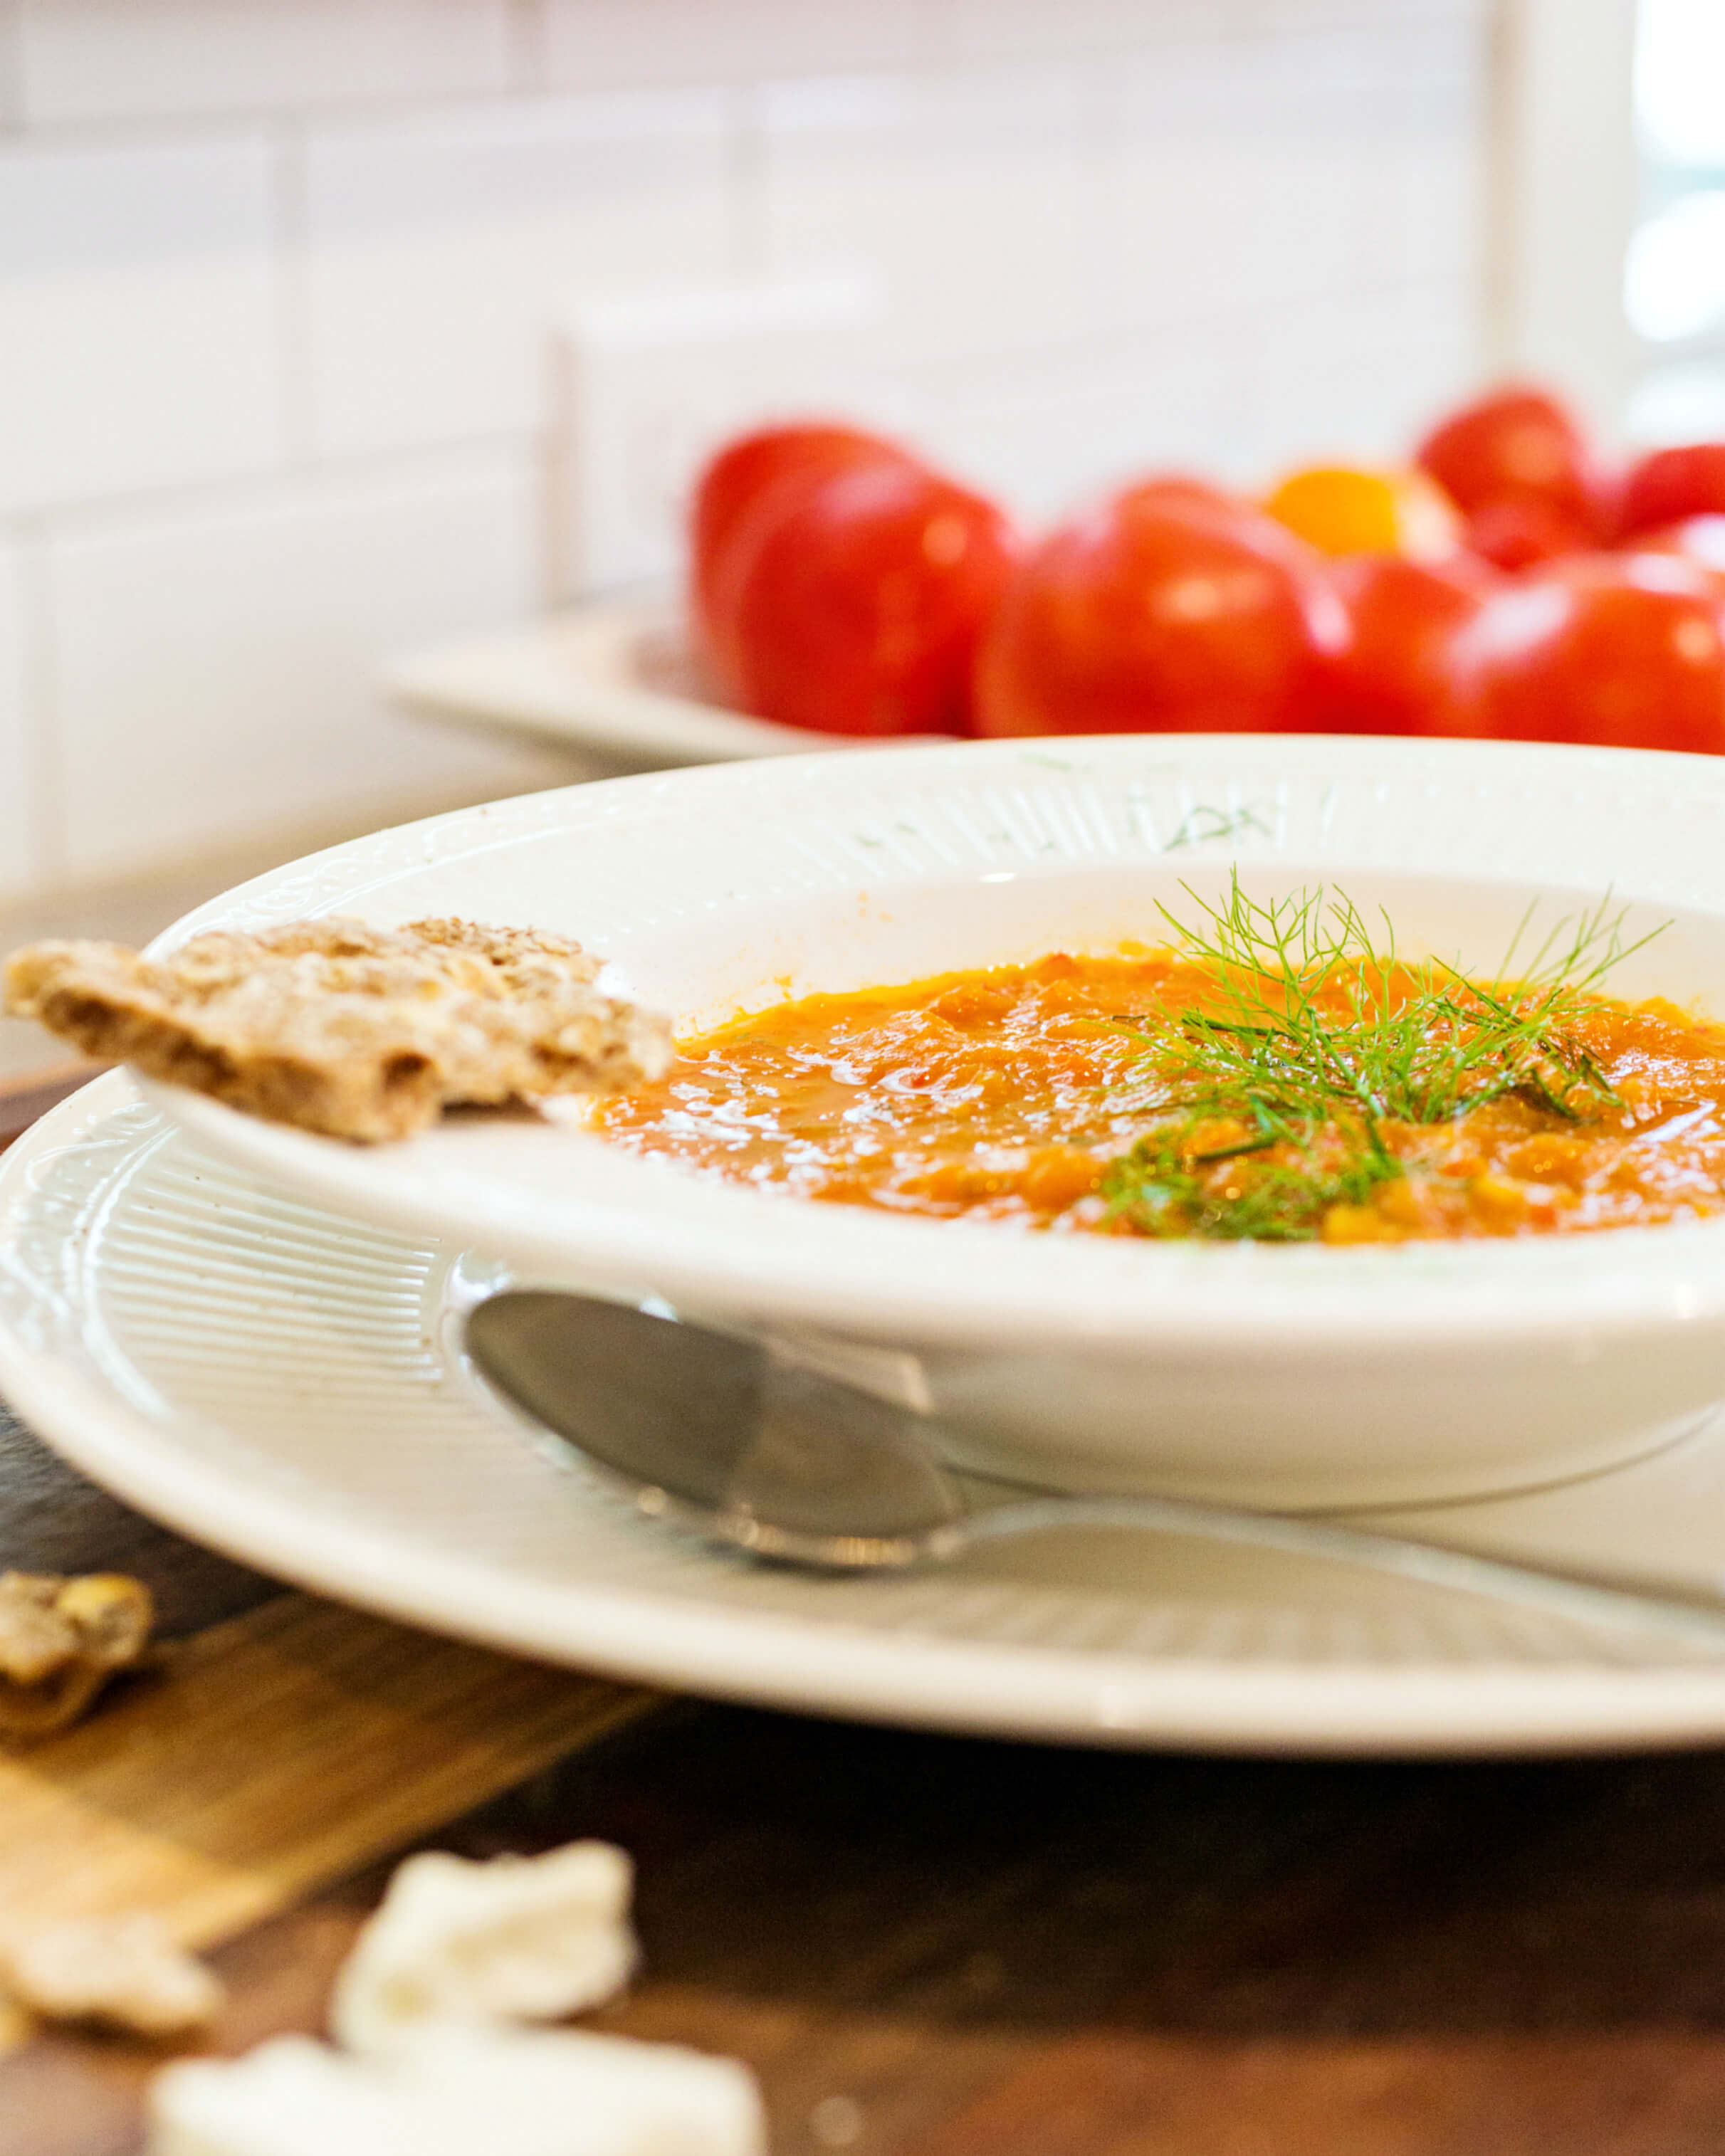 Summer Tomato Soup